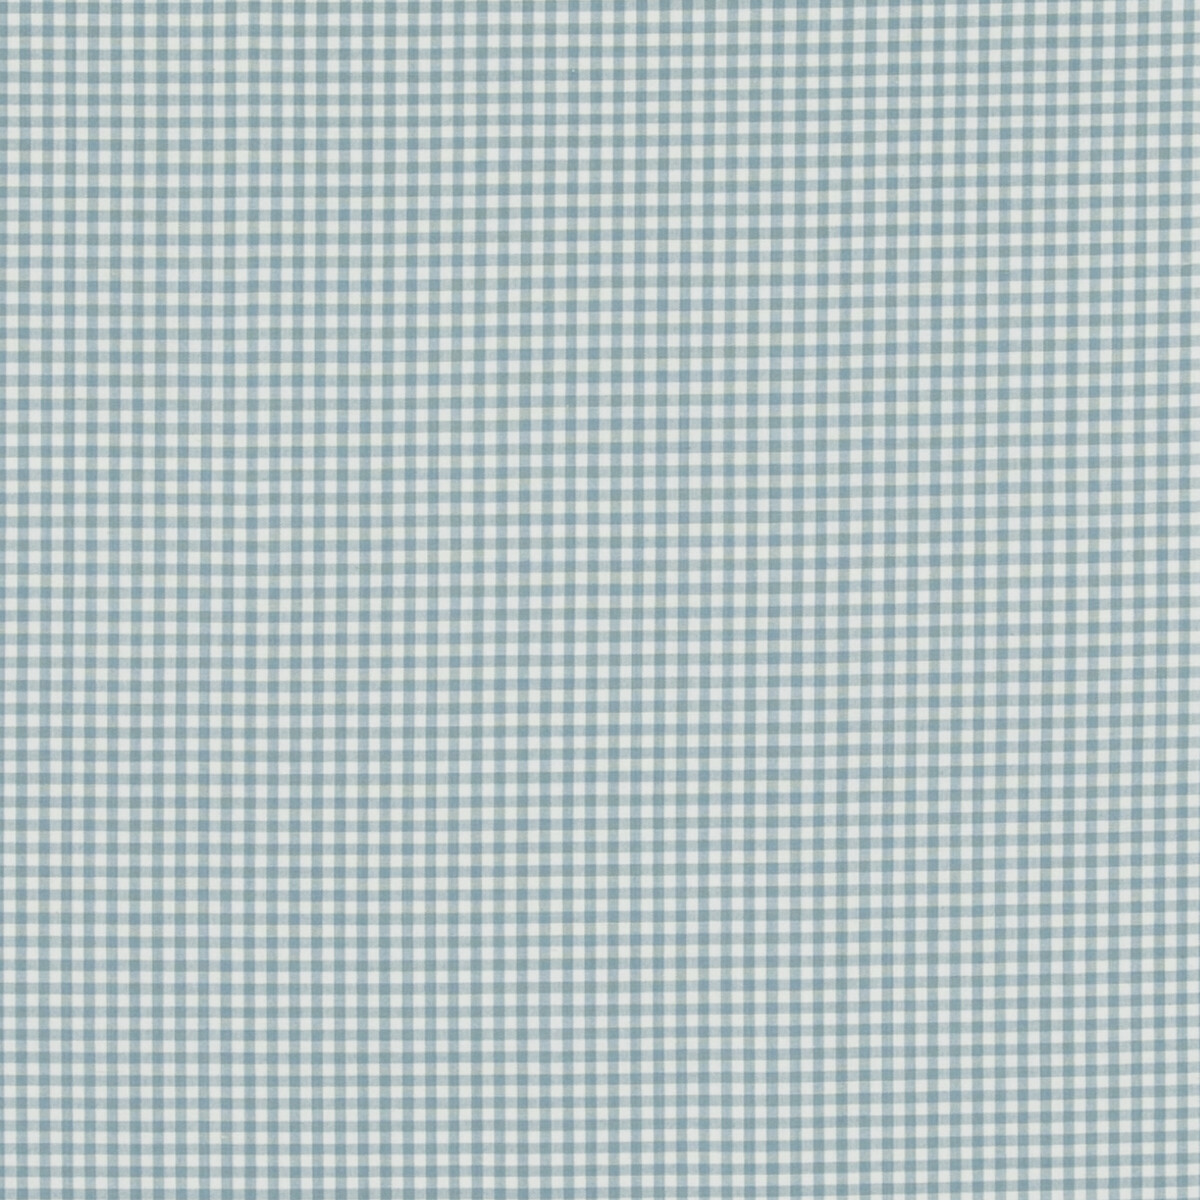 Baker Lifestyle Pf50506.725.0 Sherborne Gingham Multipurpose Fabric in Aqua/Green